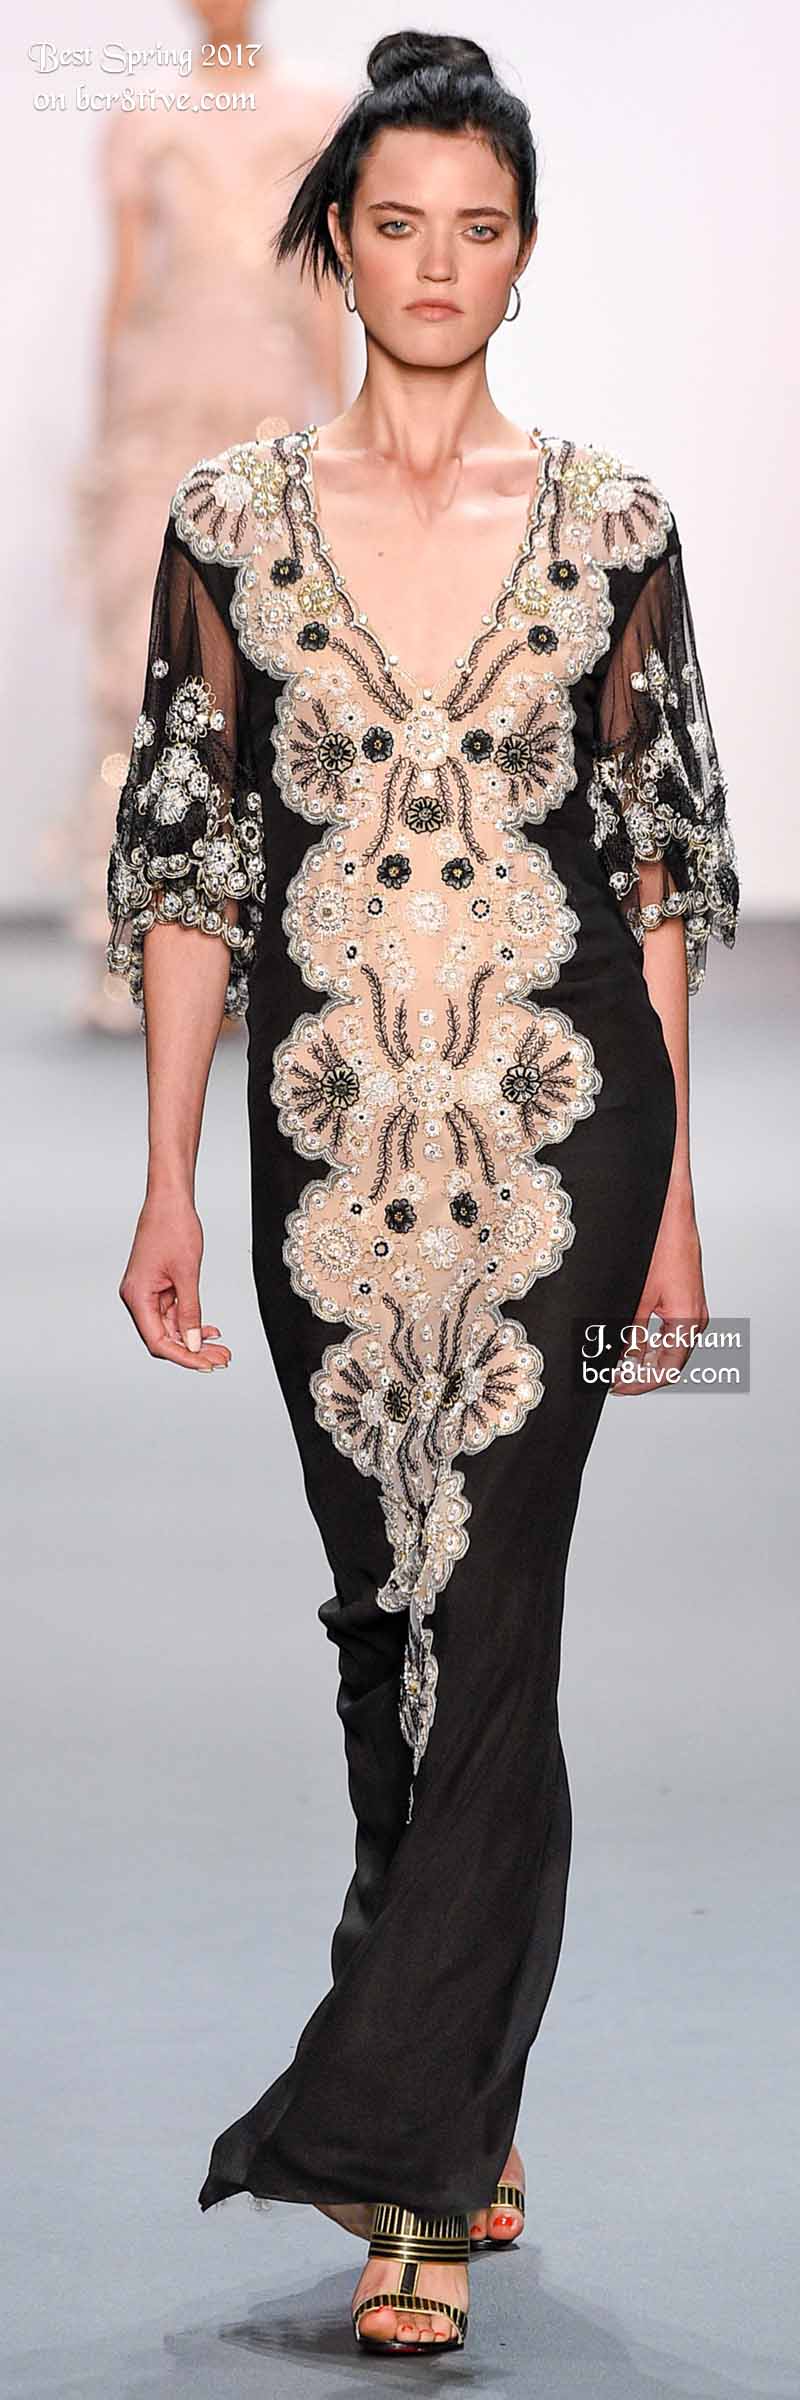 Jenny Packham - Best Looks from New York Fashion Week Spring 2017